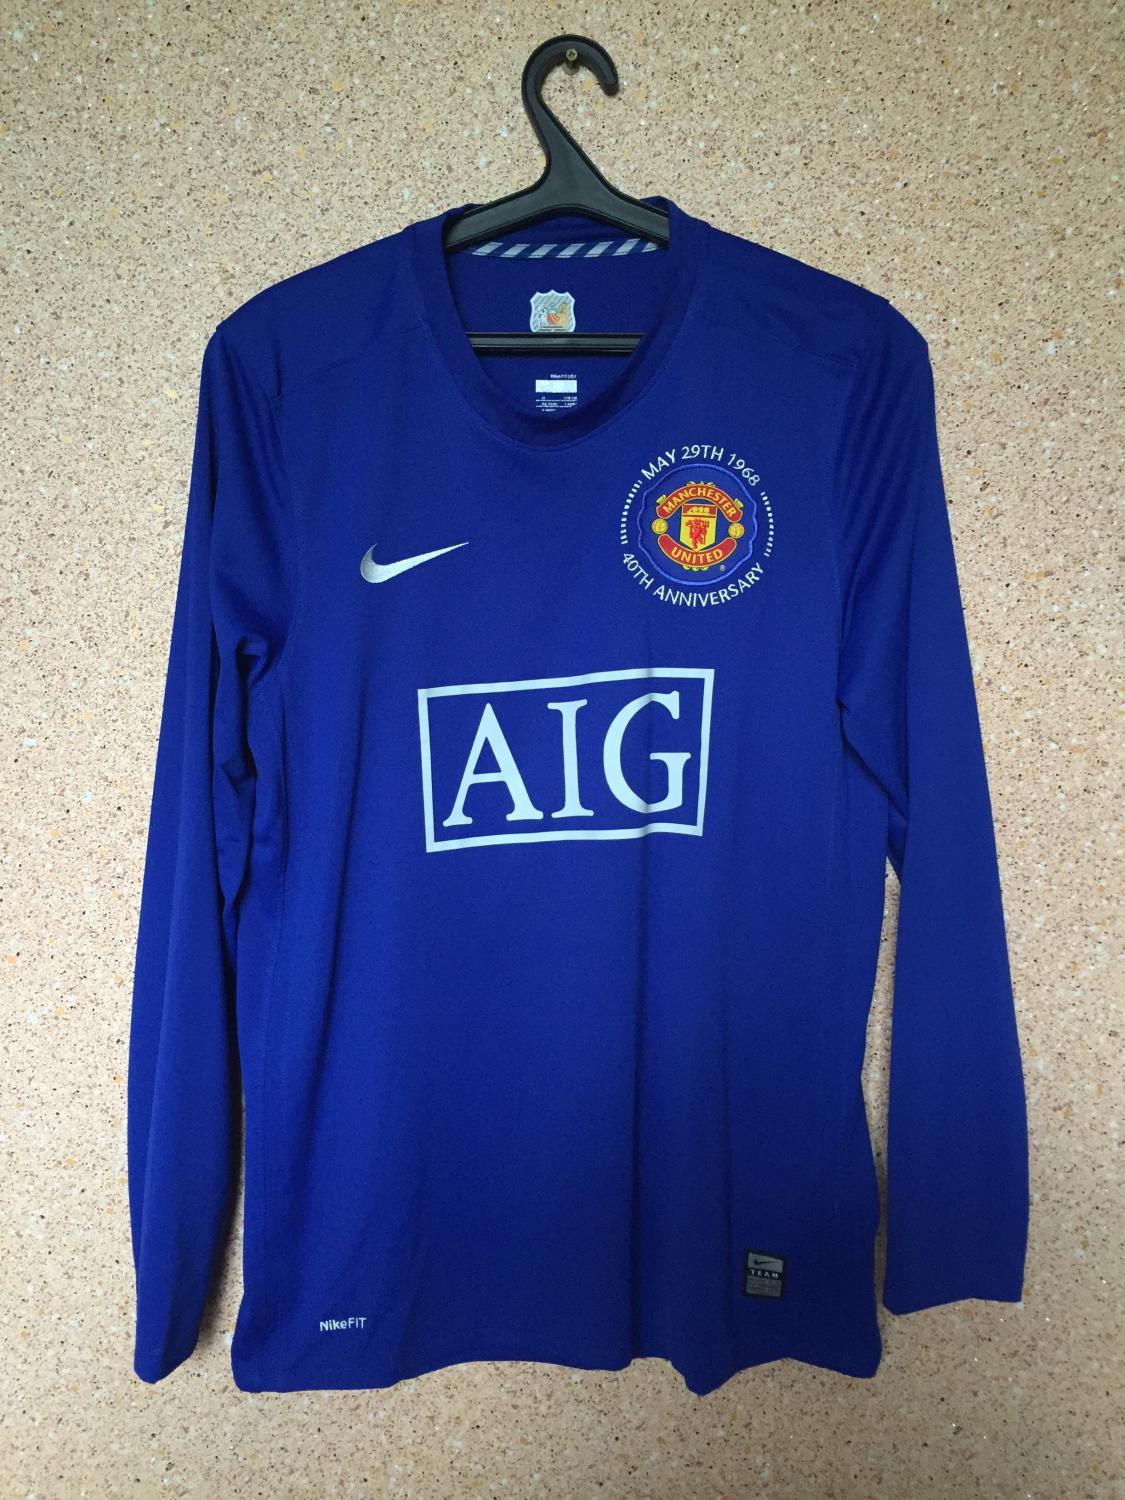 Manchester United Third football shirt 2008 - 2009. Sponsored by AIG